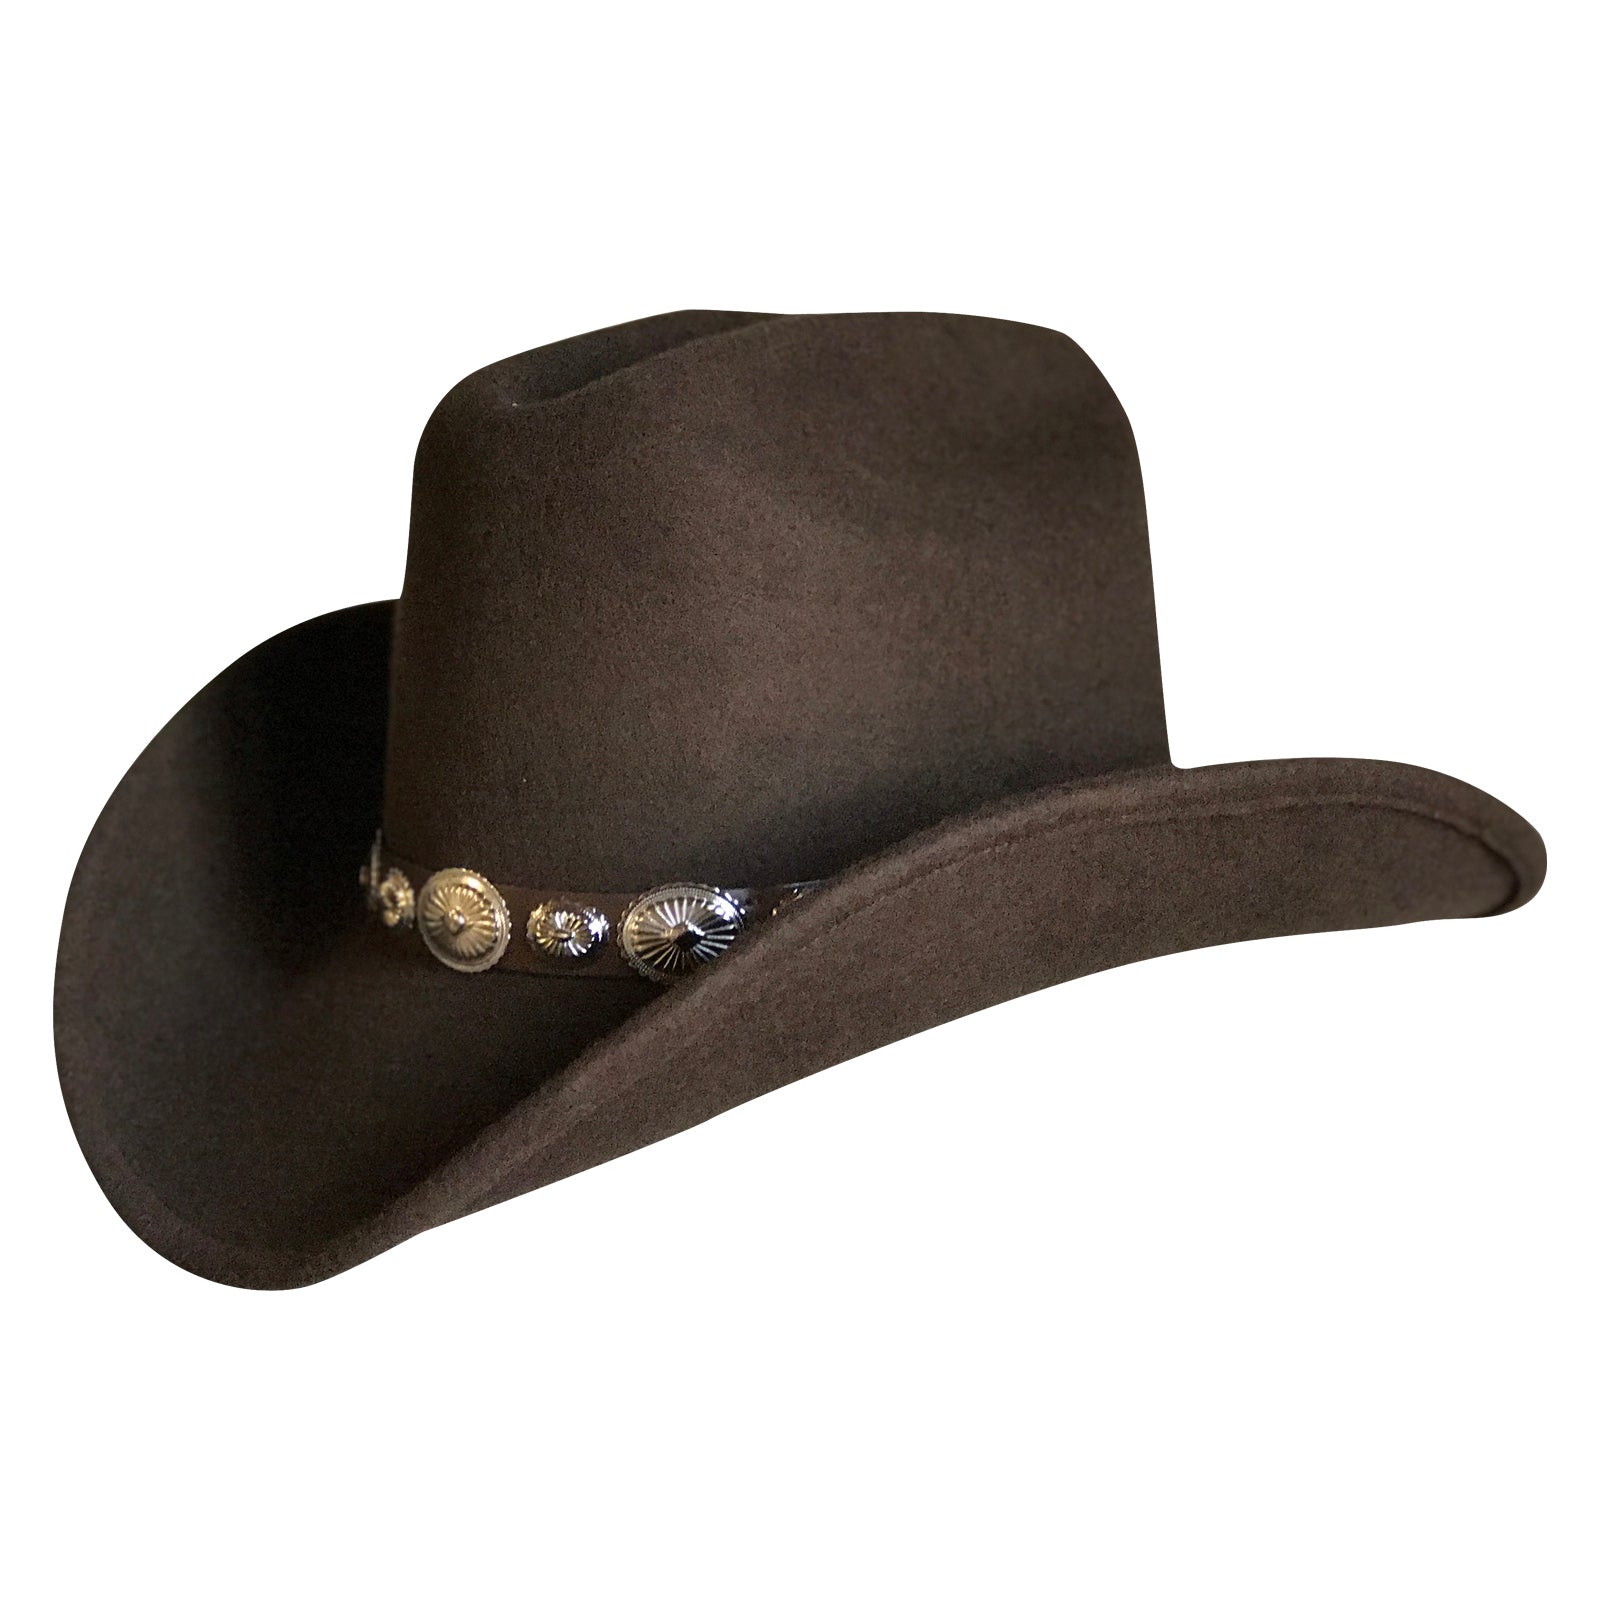 Rockmount Crushable Brown Felt Concho Western Cowboy Hat